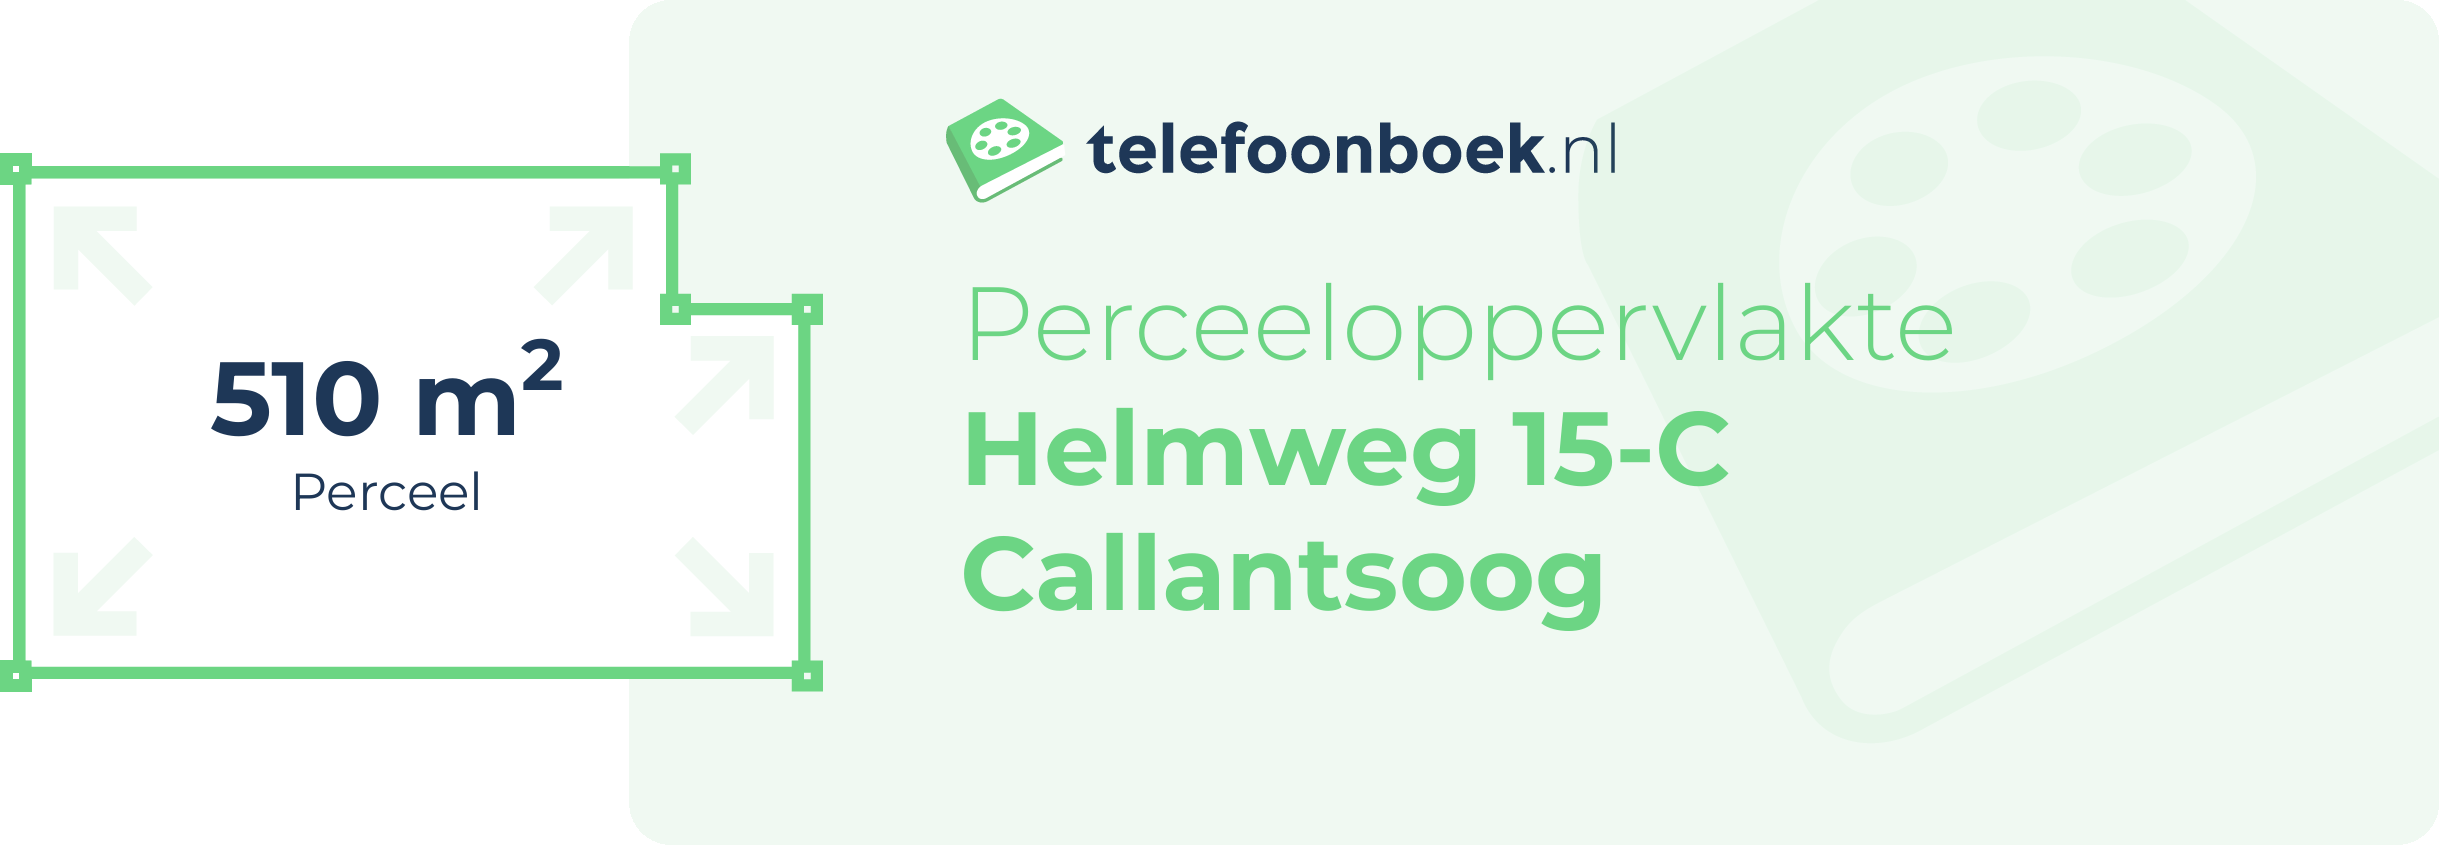 Perceeloppervlakte Helmweg 15-C Callantsoog